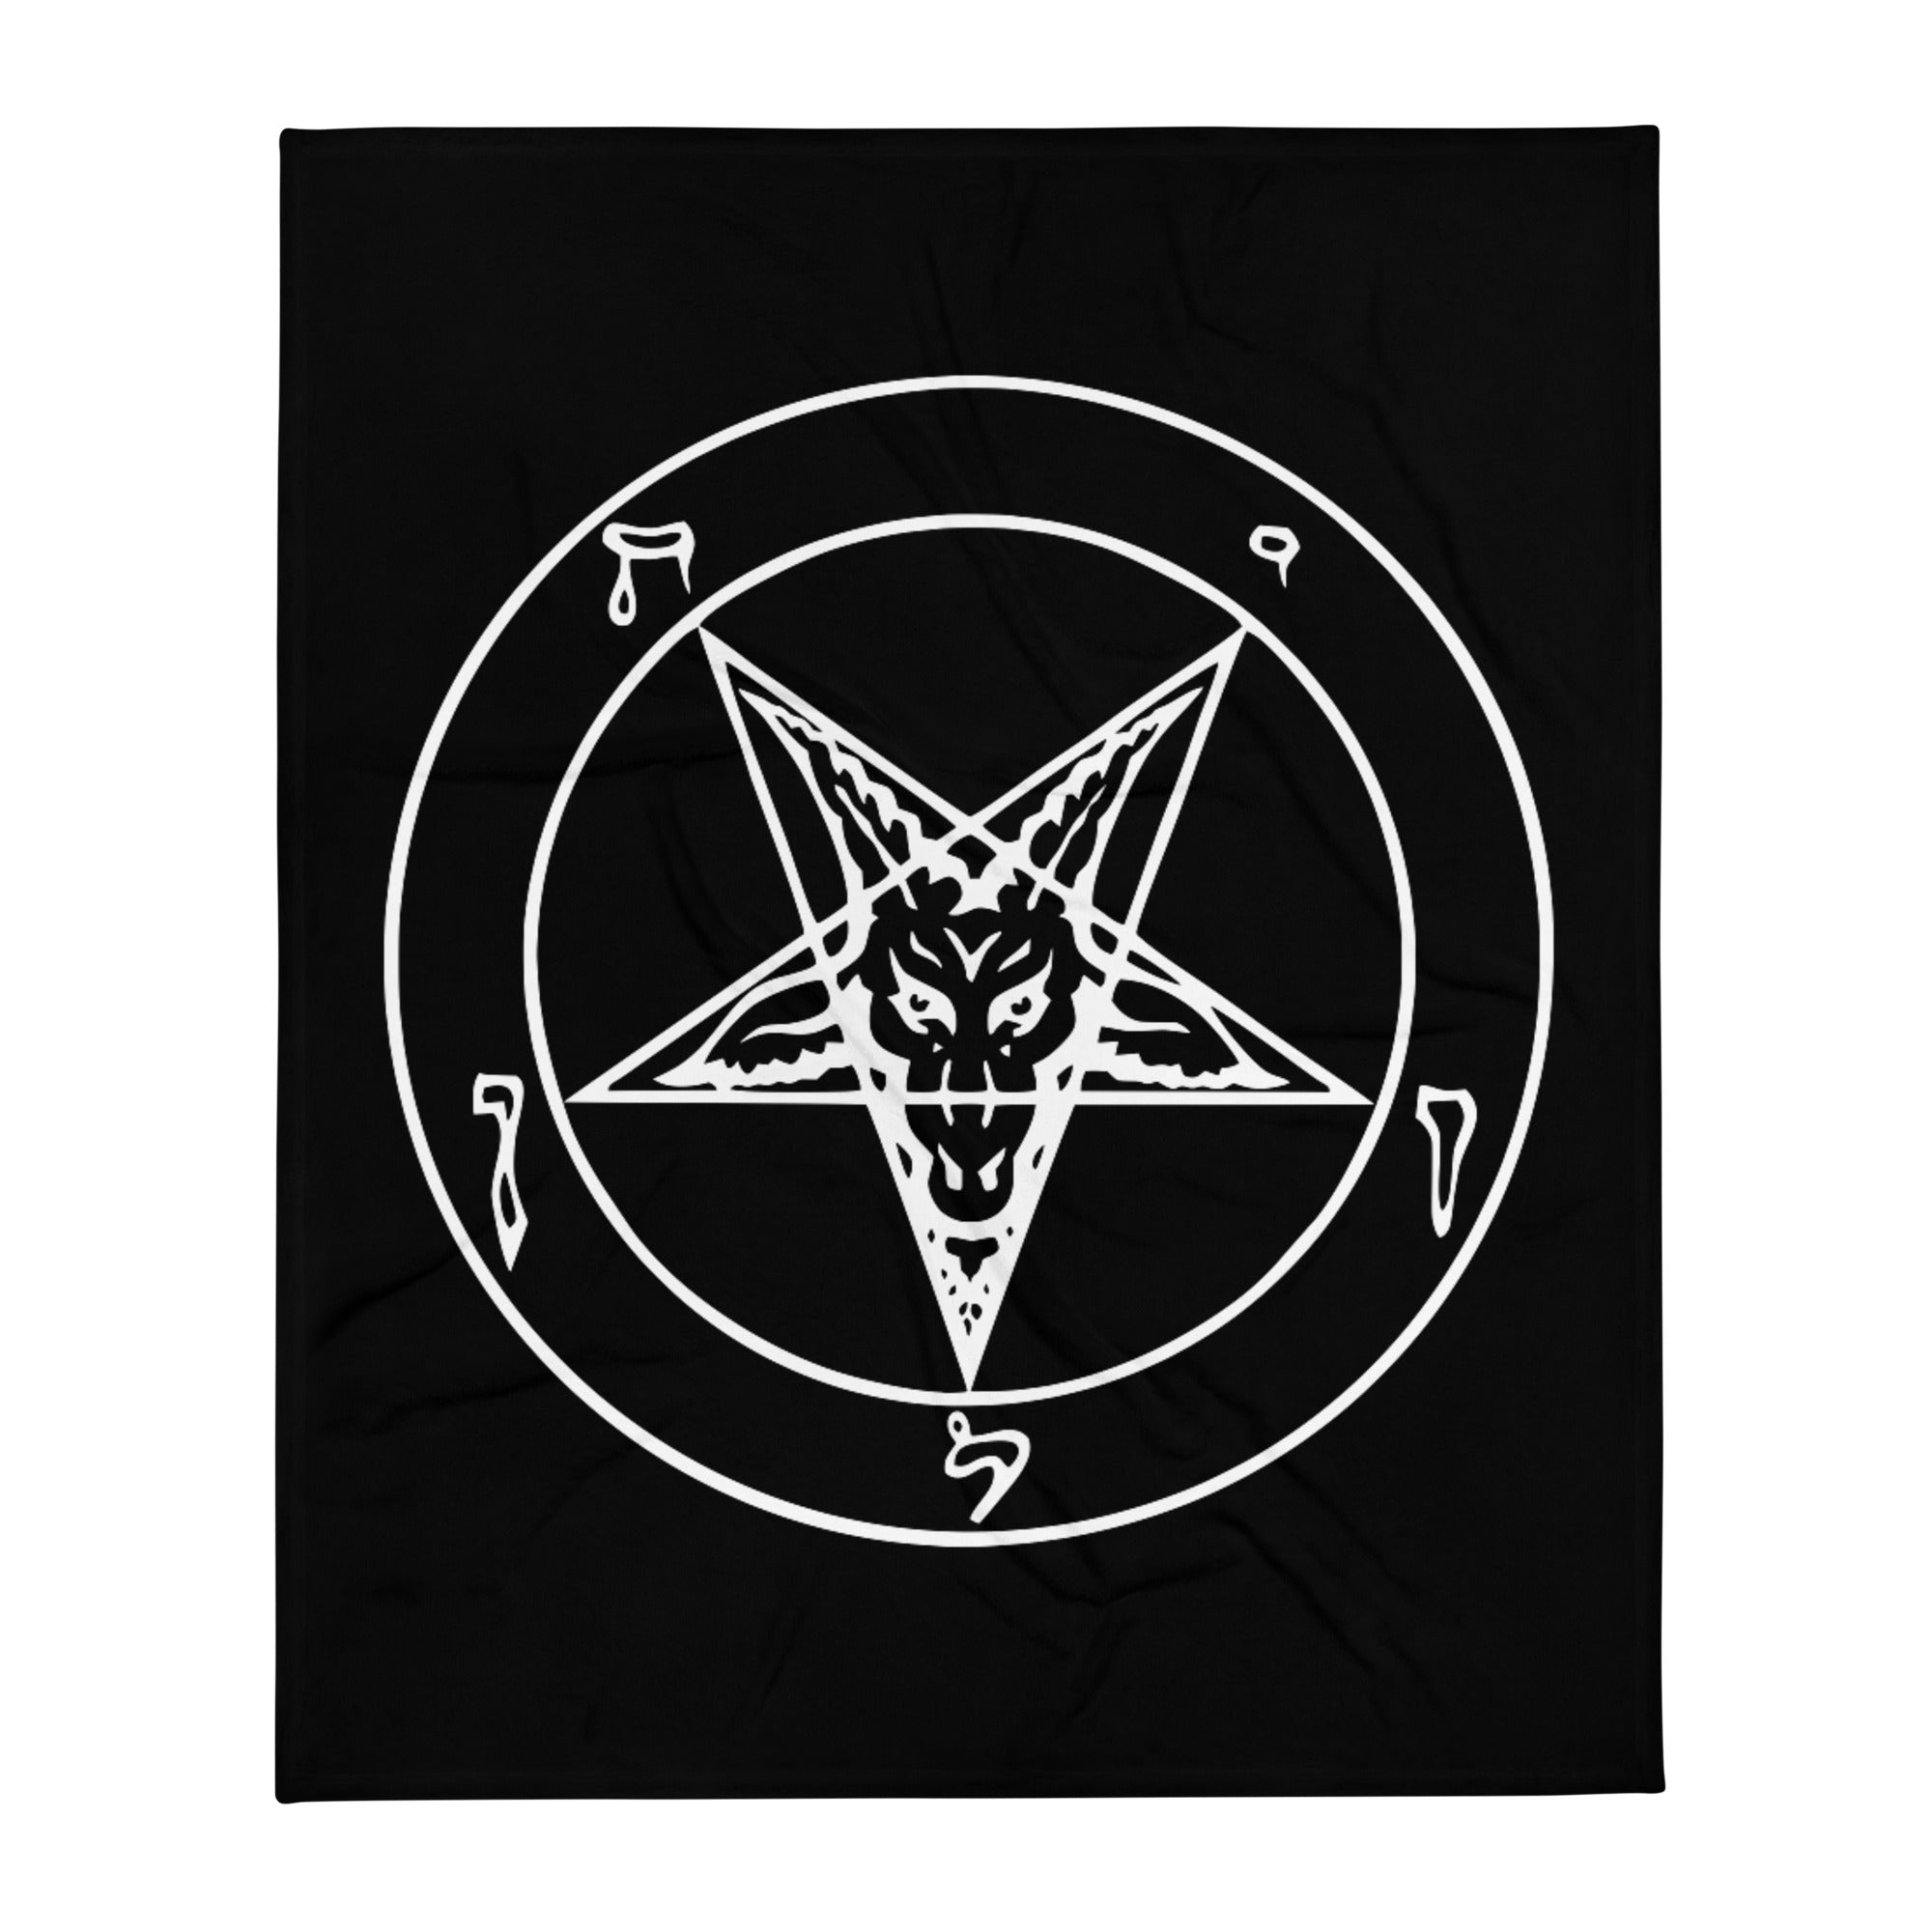 Sigil of Baphomet Satanic Occult Symbol on Cozy Throw Blanket - Edge of Life Designs